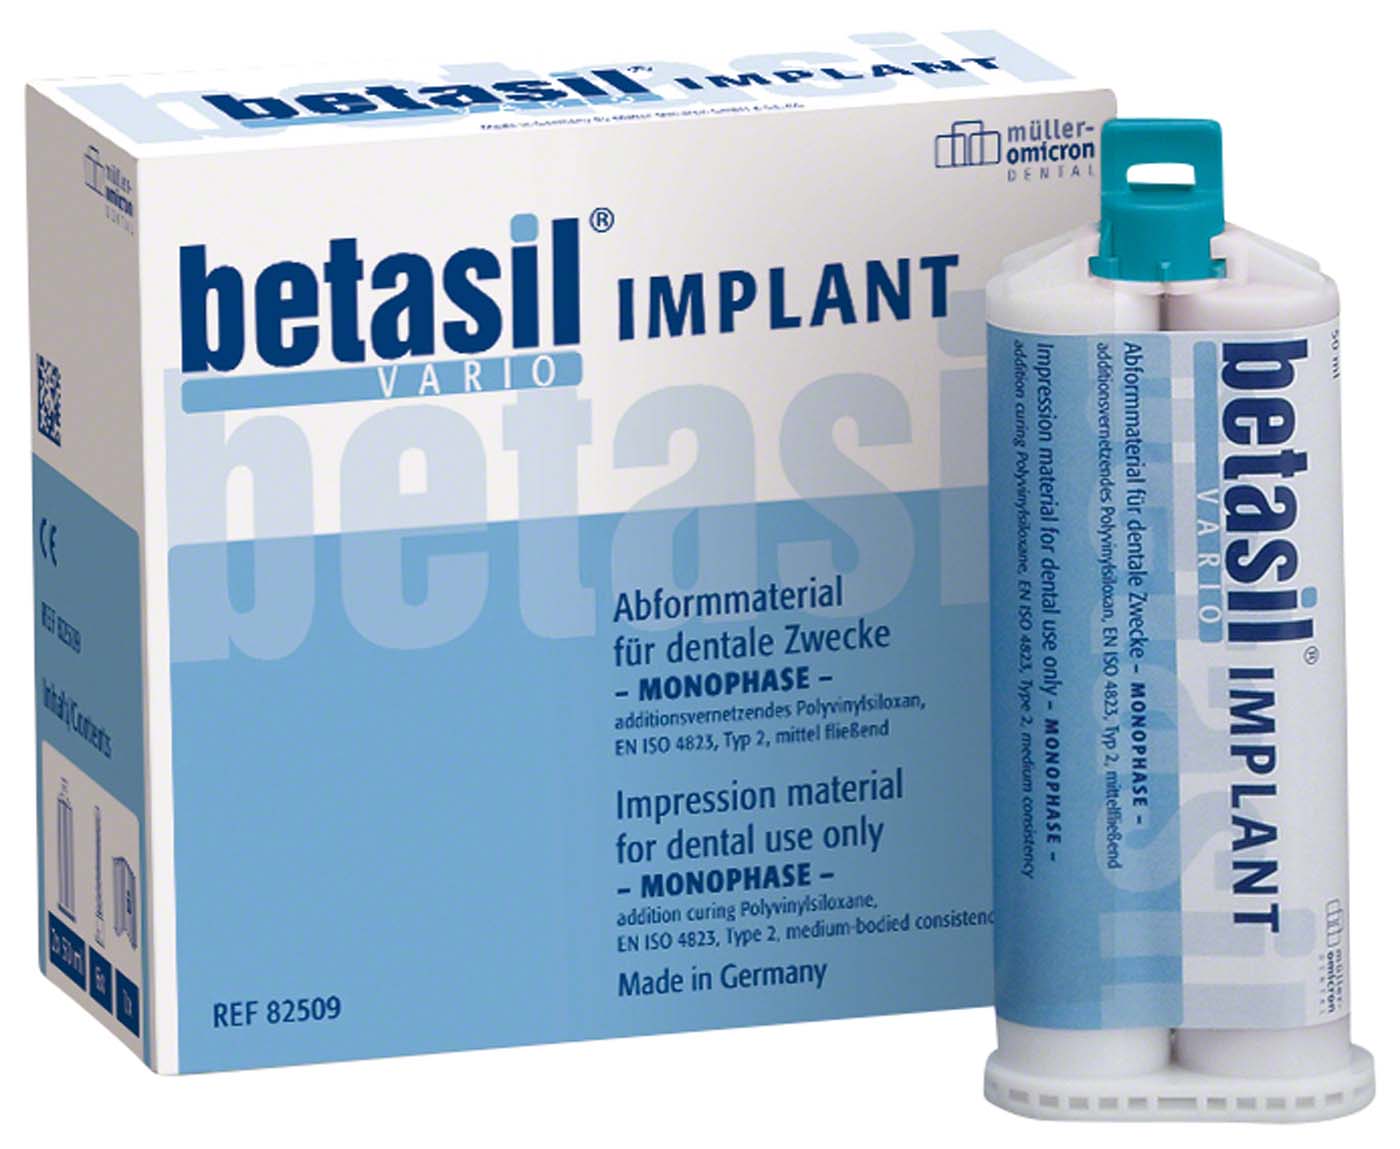 betasil® VARIO IMPLANT Müller-Omicron